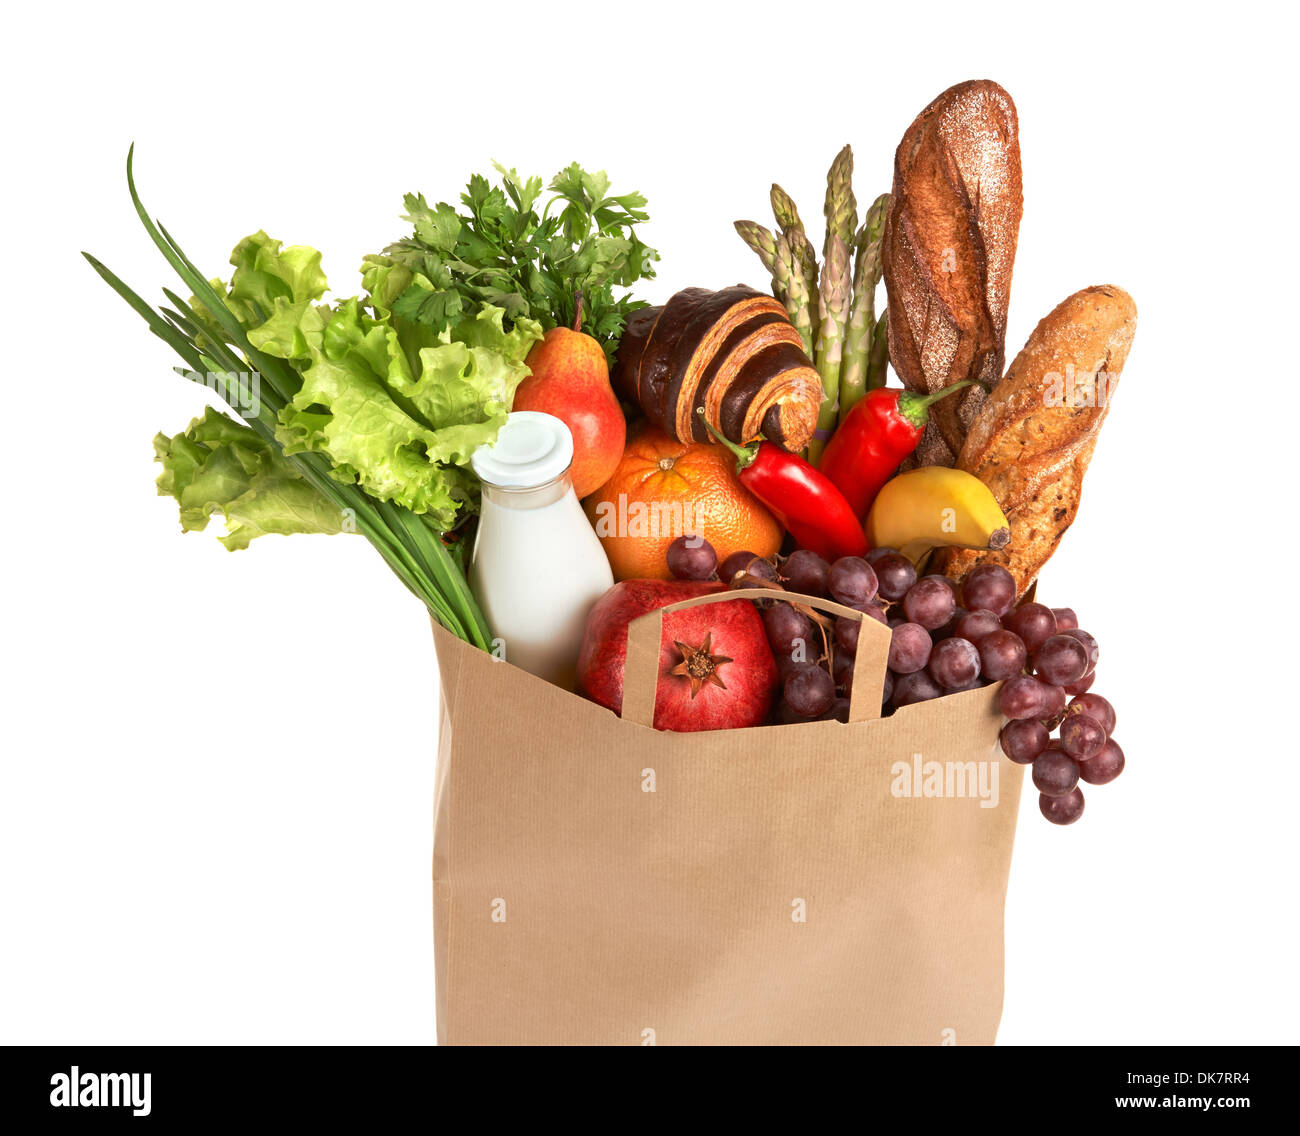 https://c8.alamy.com/comp/DK7RR4/a-grocery-bag-full-of-healthy-fruits-and-vegetables-DK7RR4.jpg